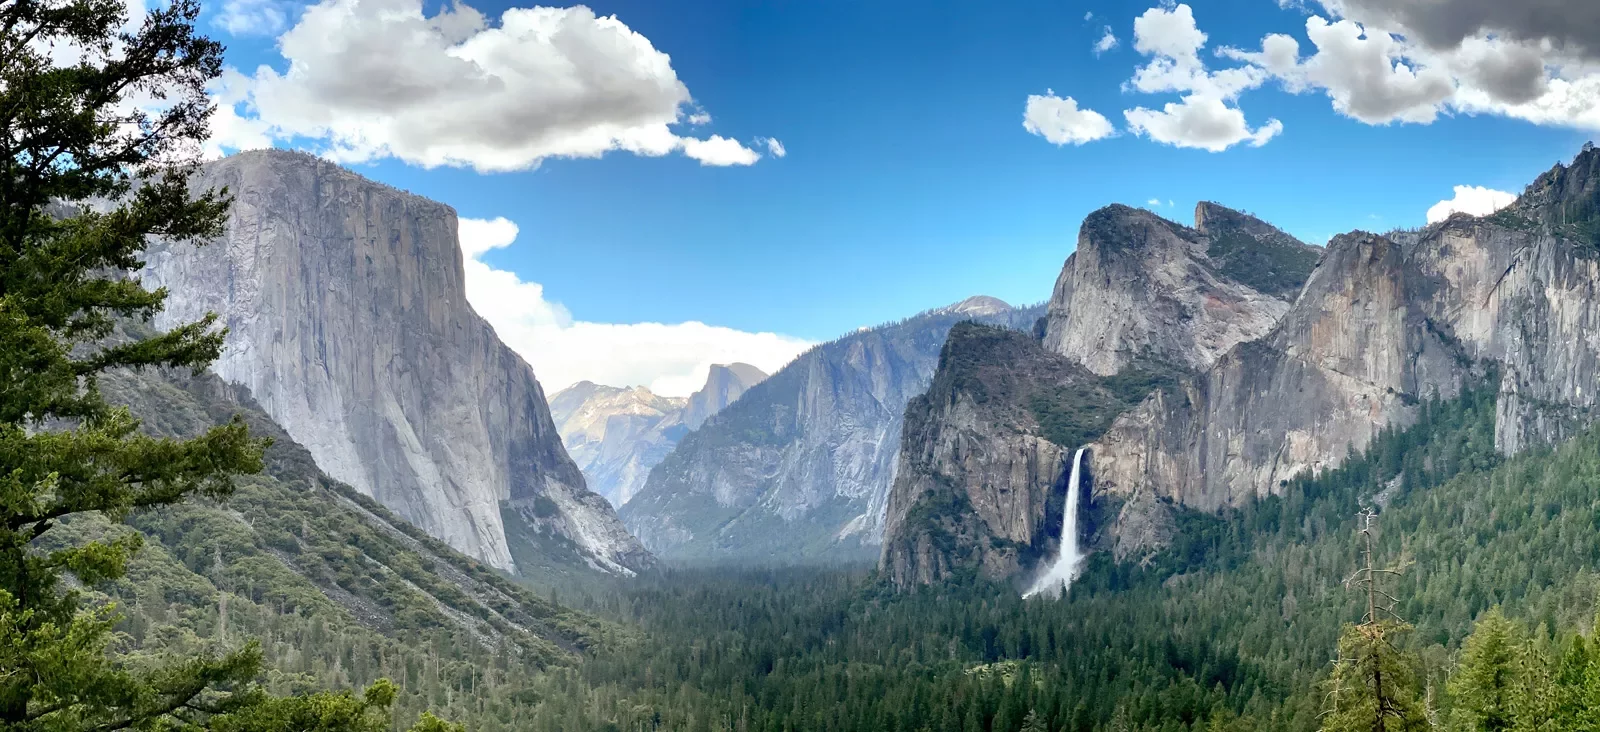 Wide shot of Yosemite Valley